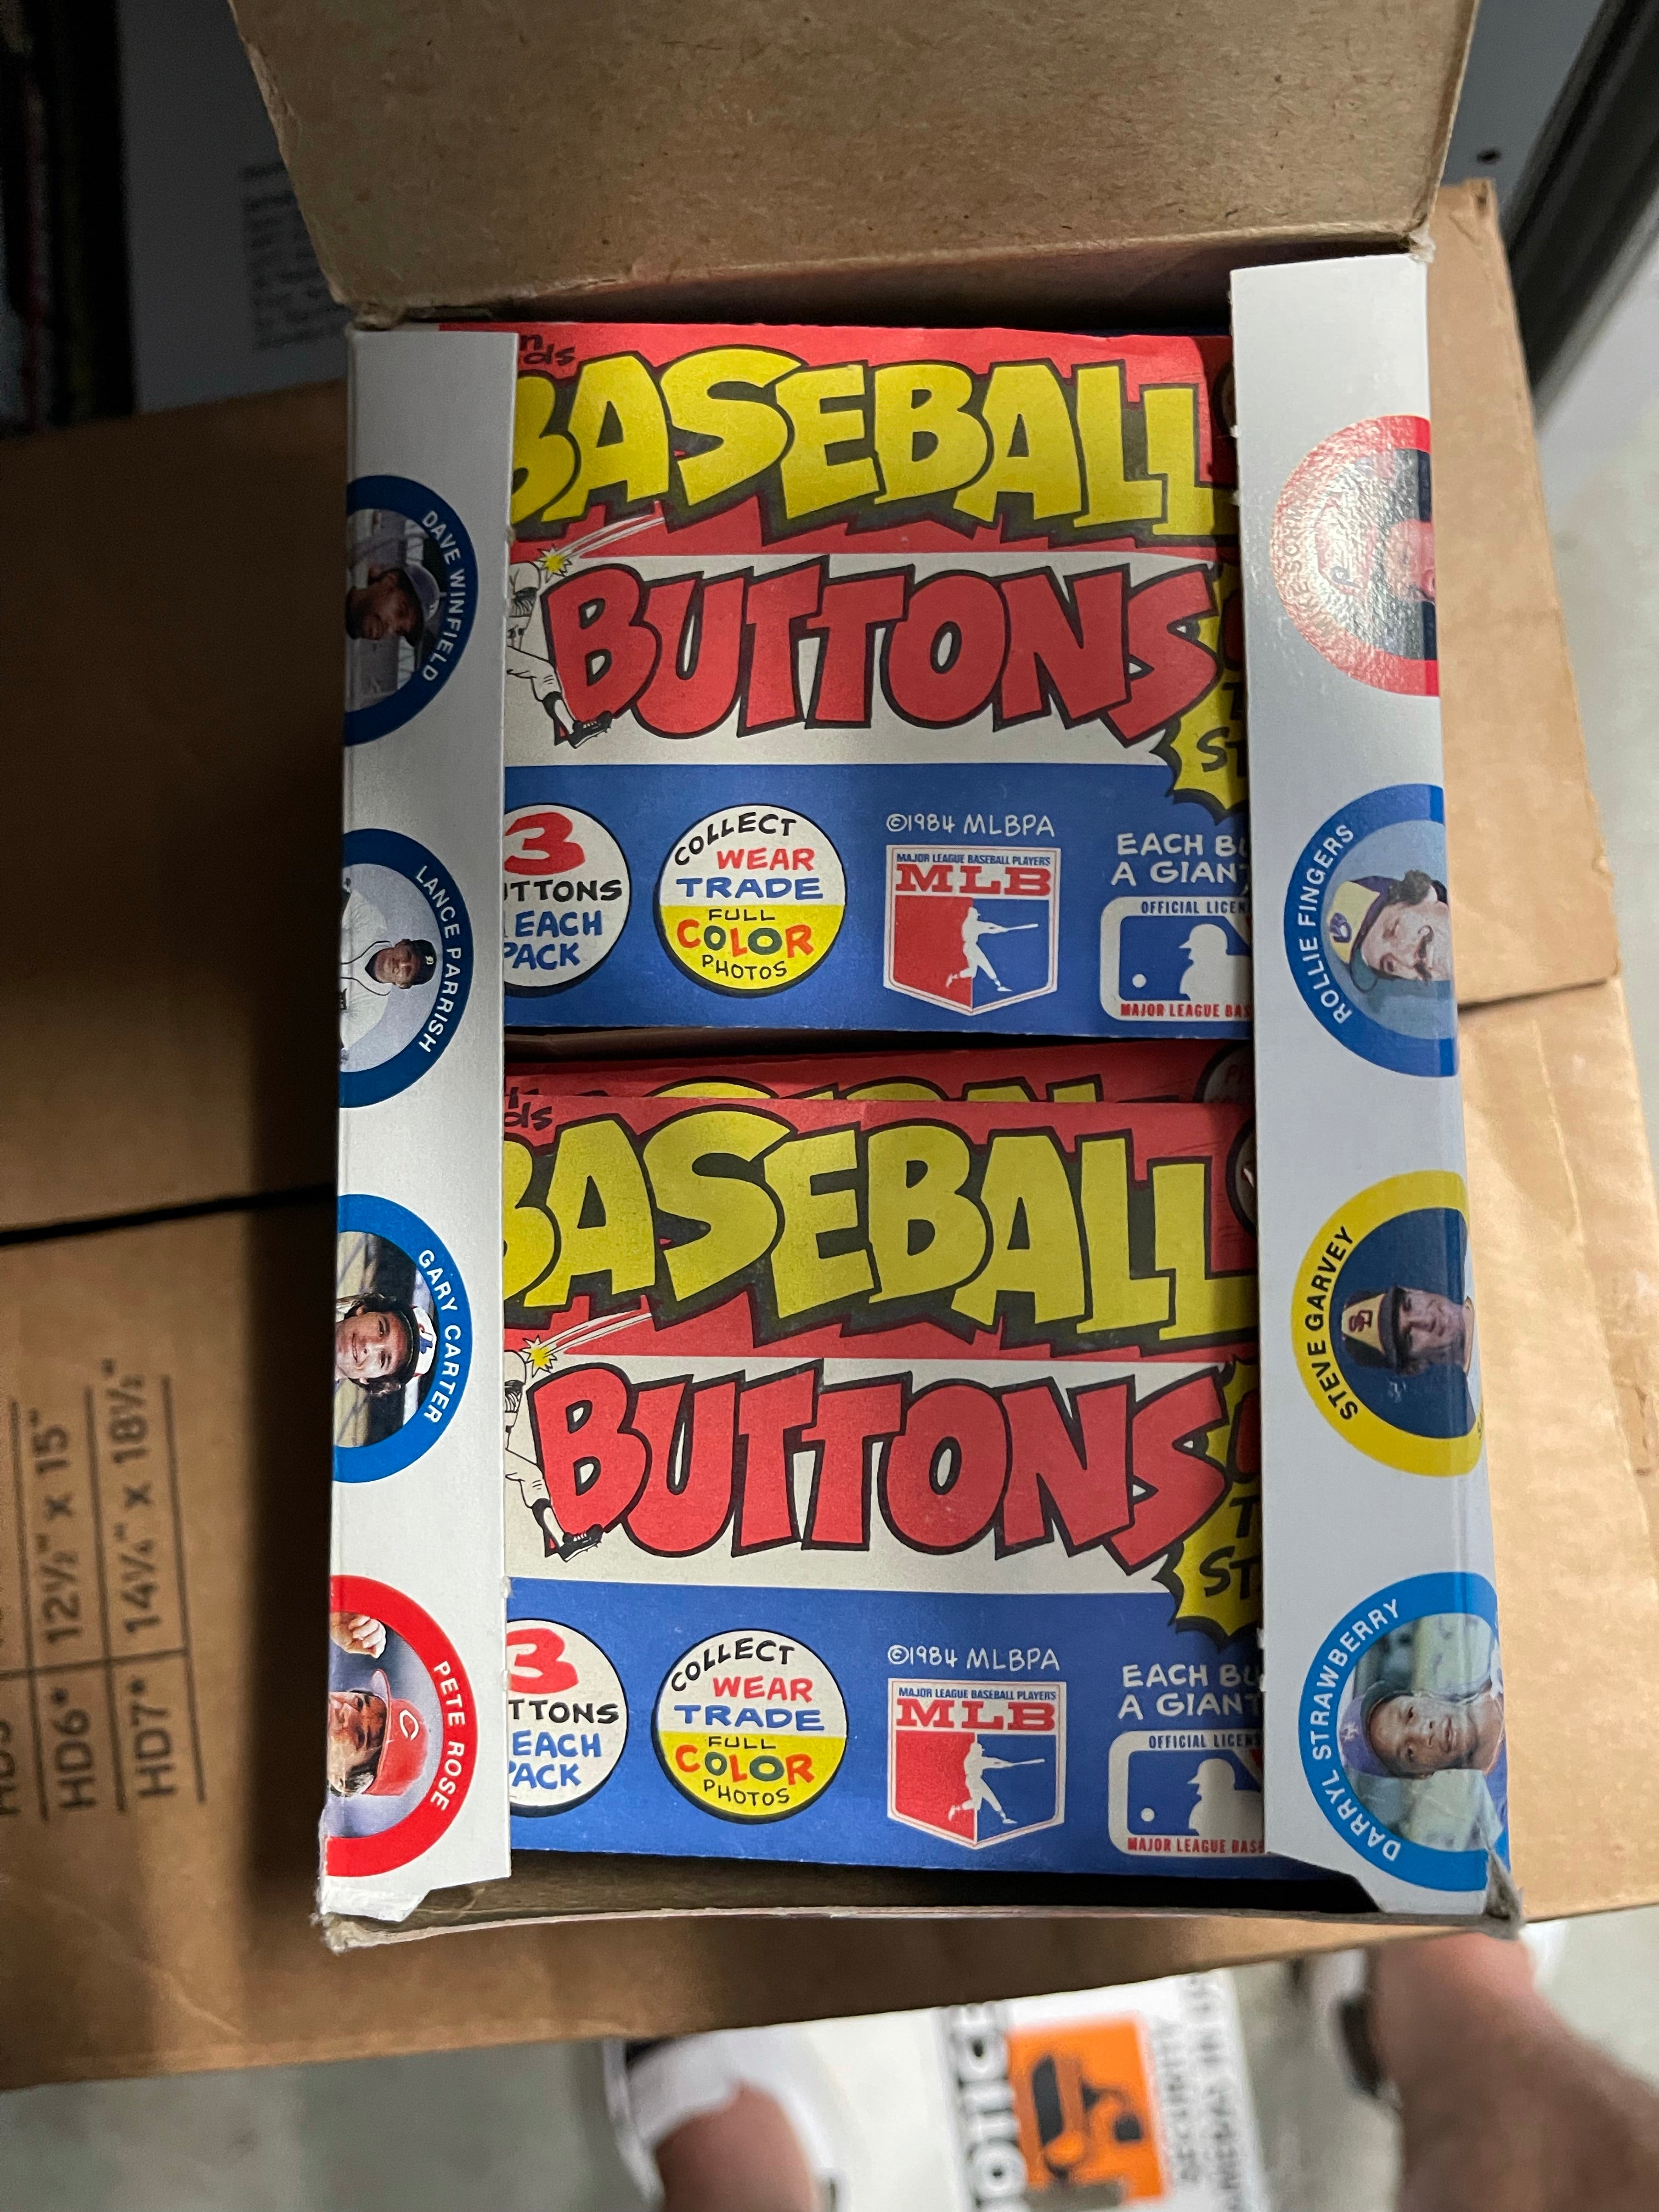 1984 Baseball stars Buttons 36 packs box